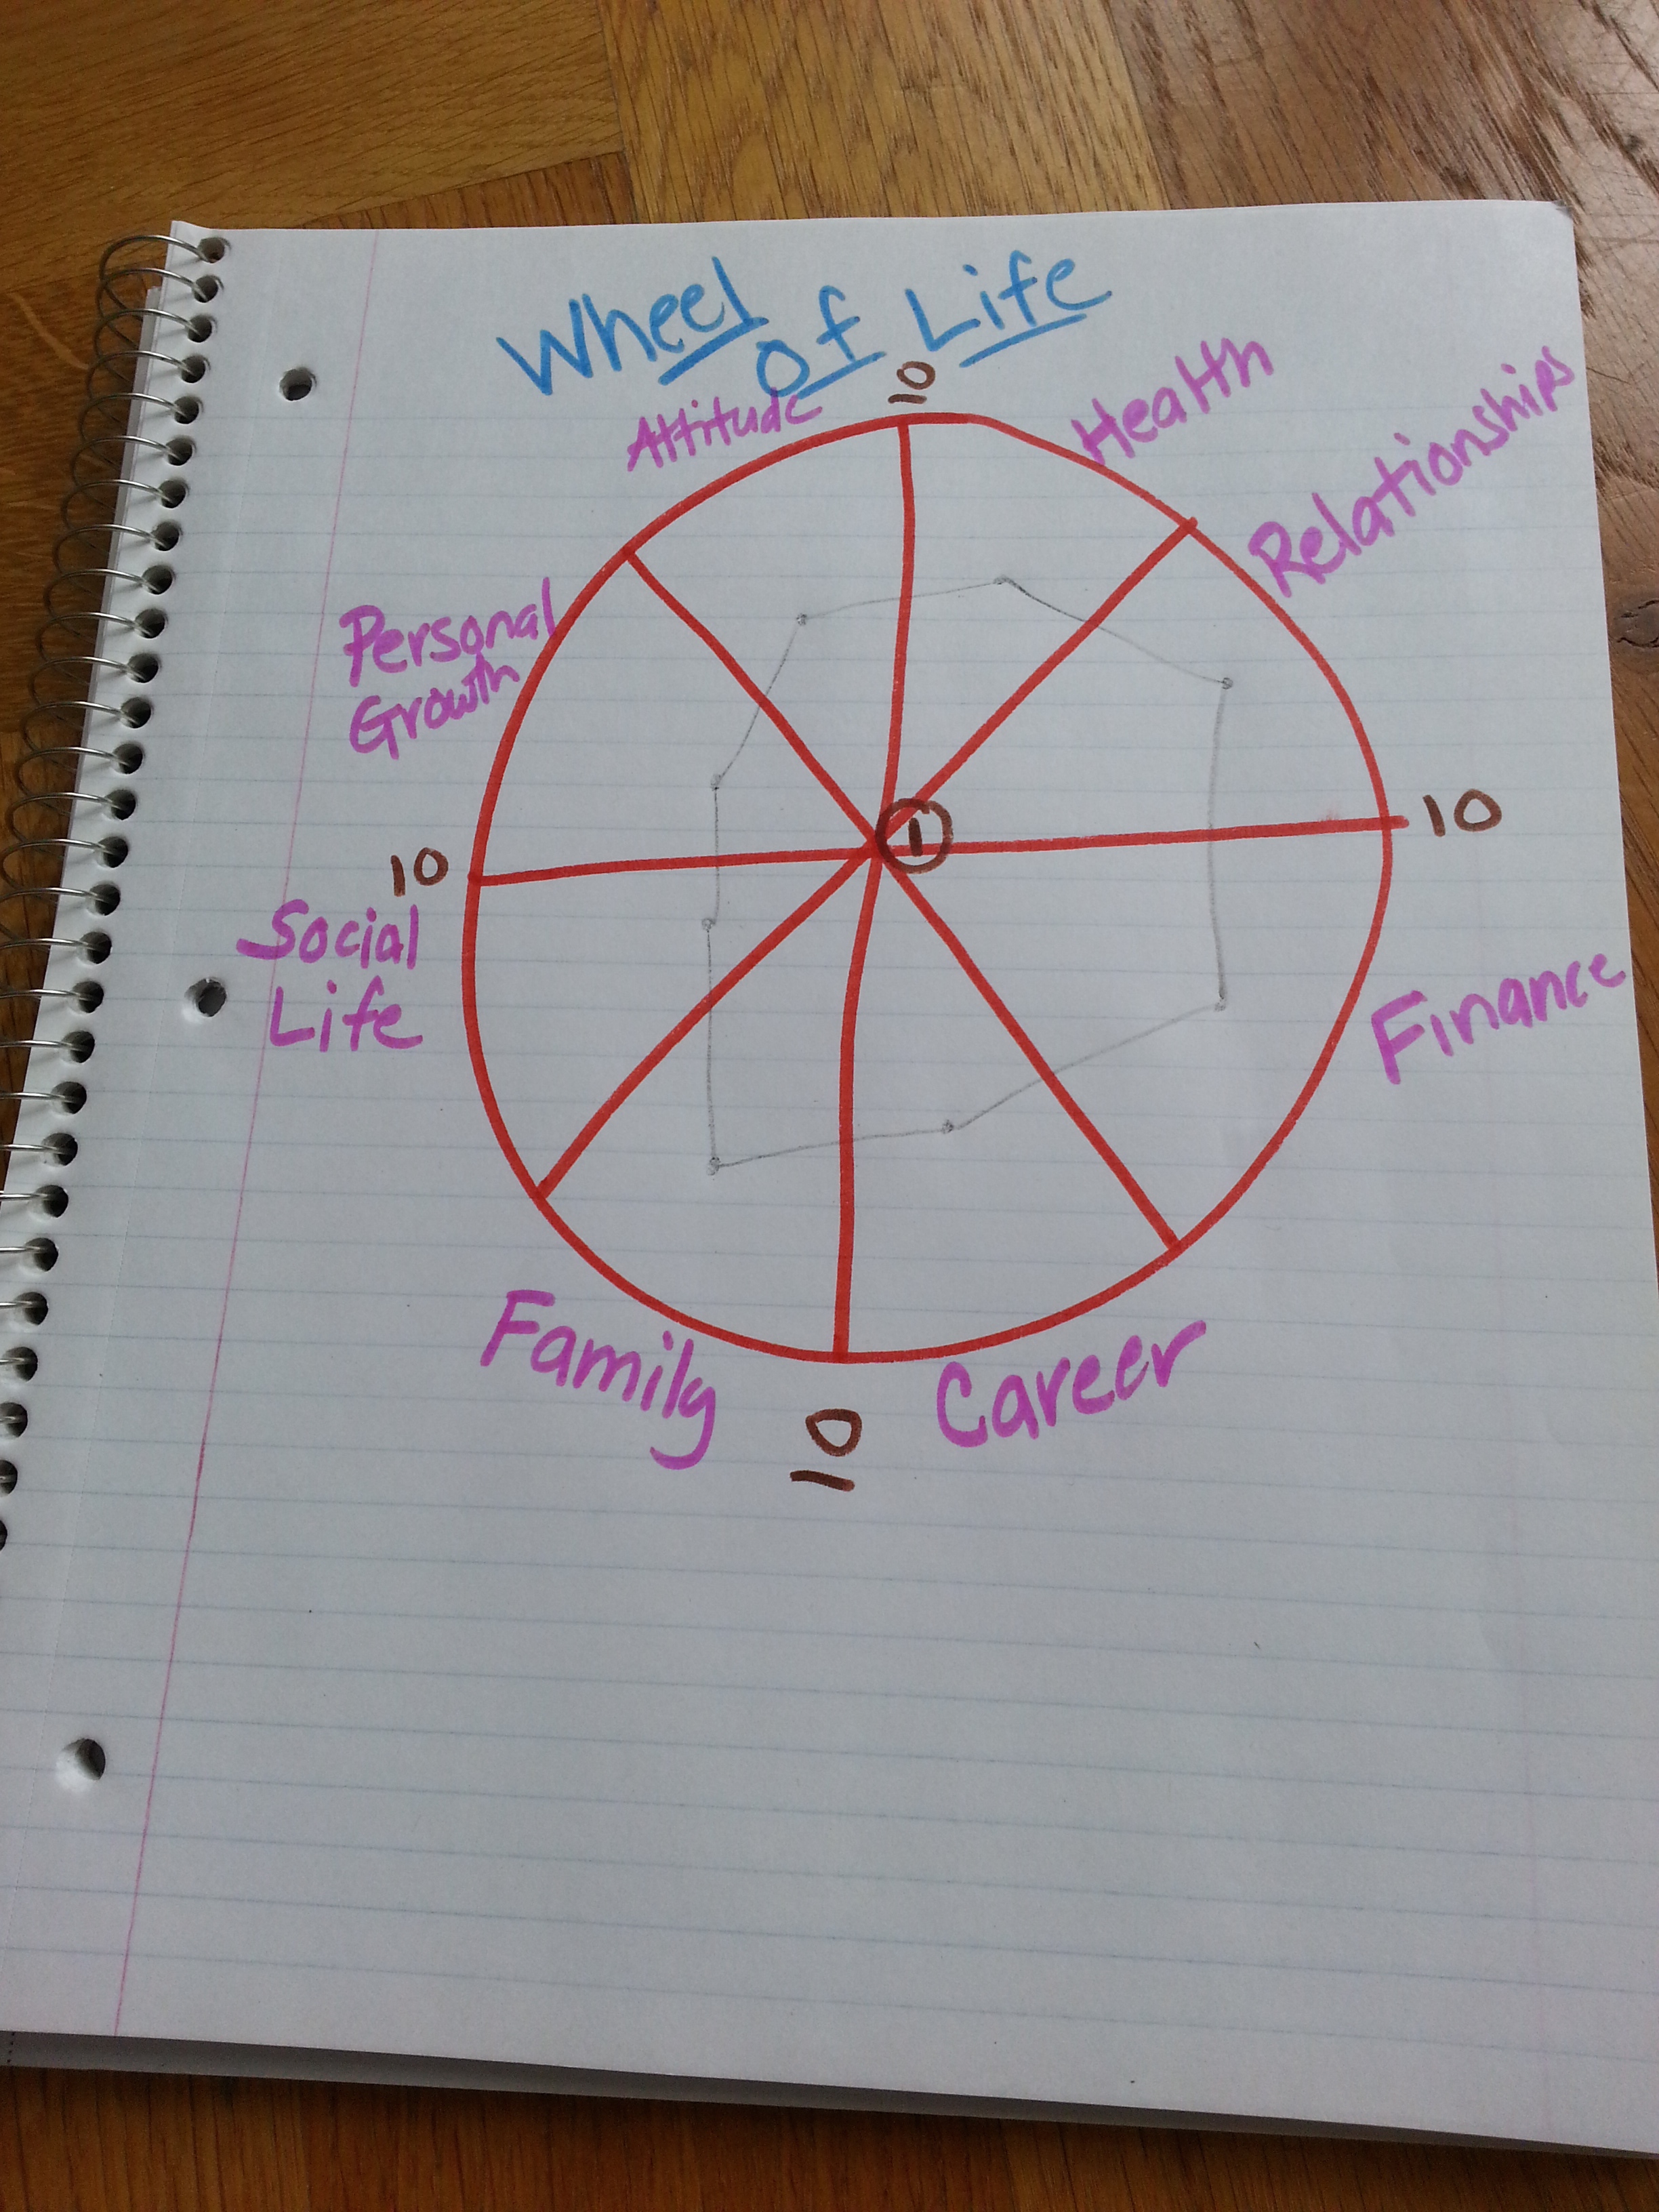 Wheel of Life: a great productivity tool